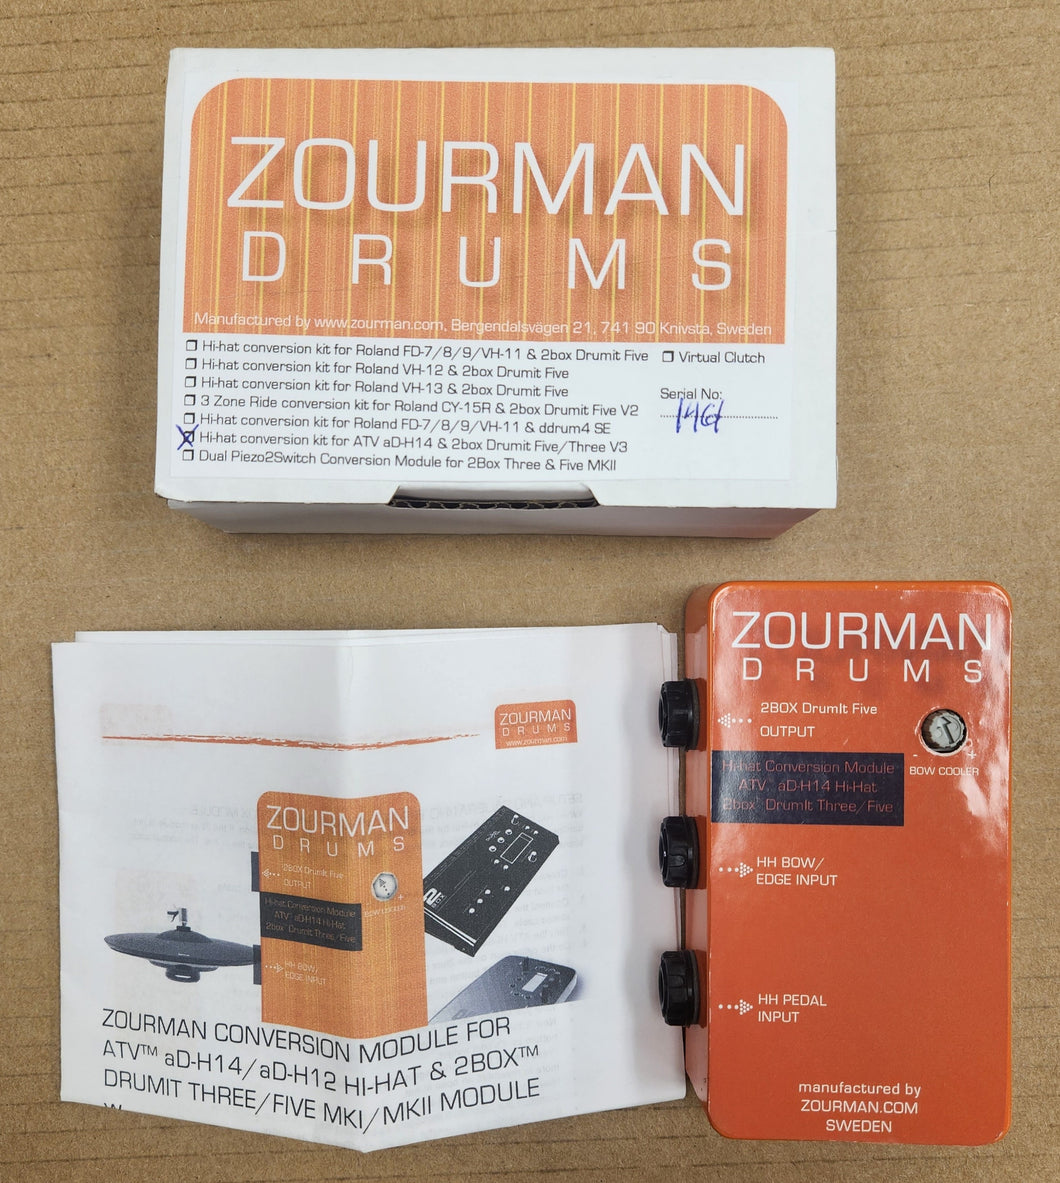 Zourman Drums Hi-hat conversion kit for ATV aD-H14 V3 - Used